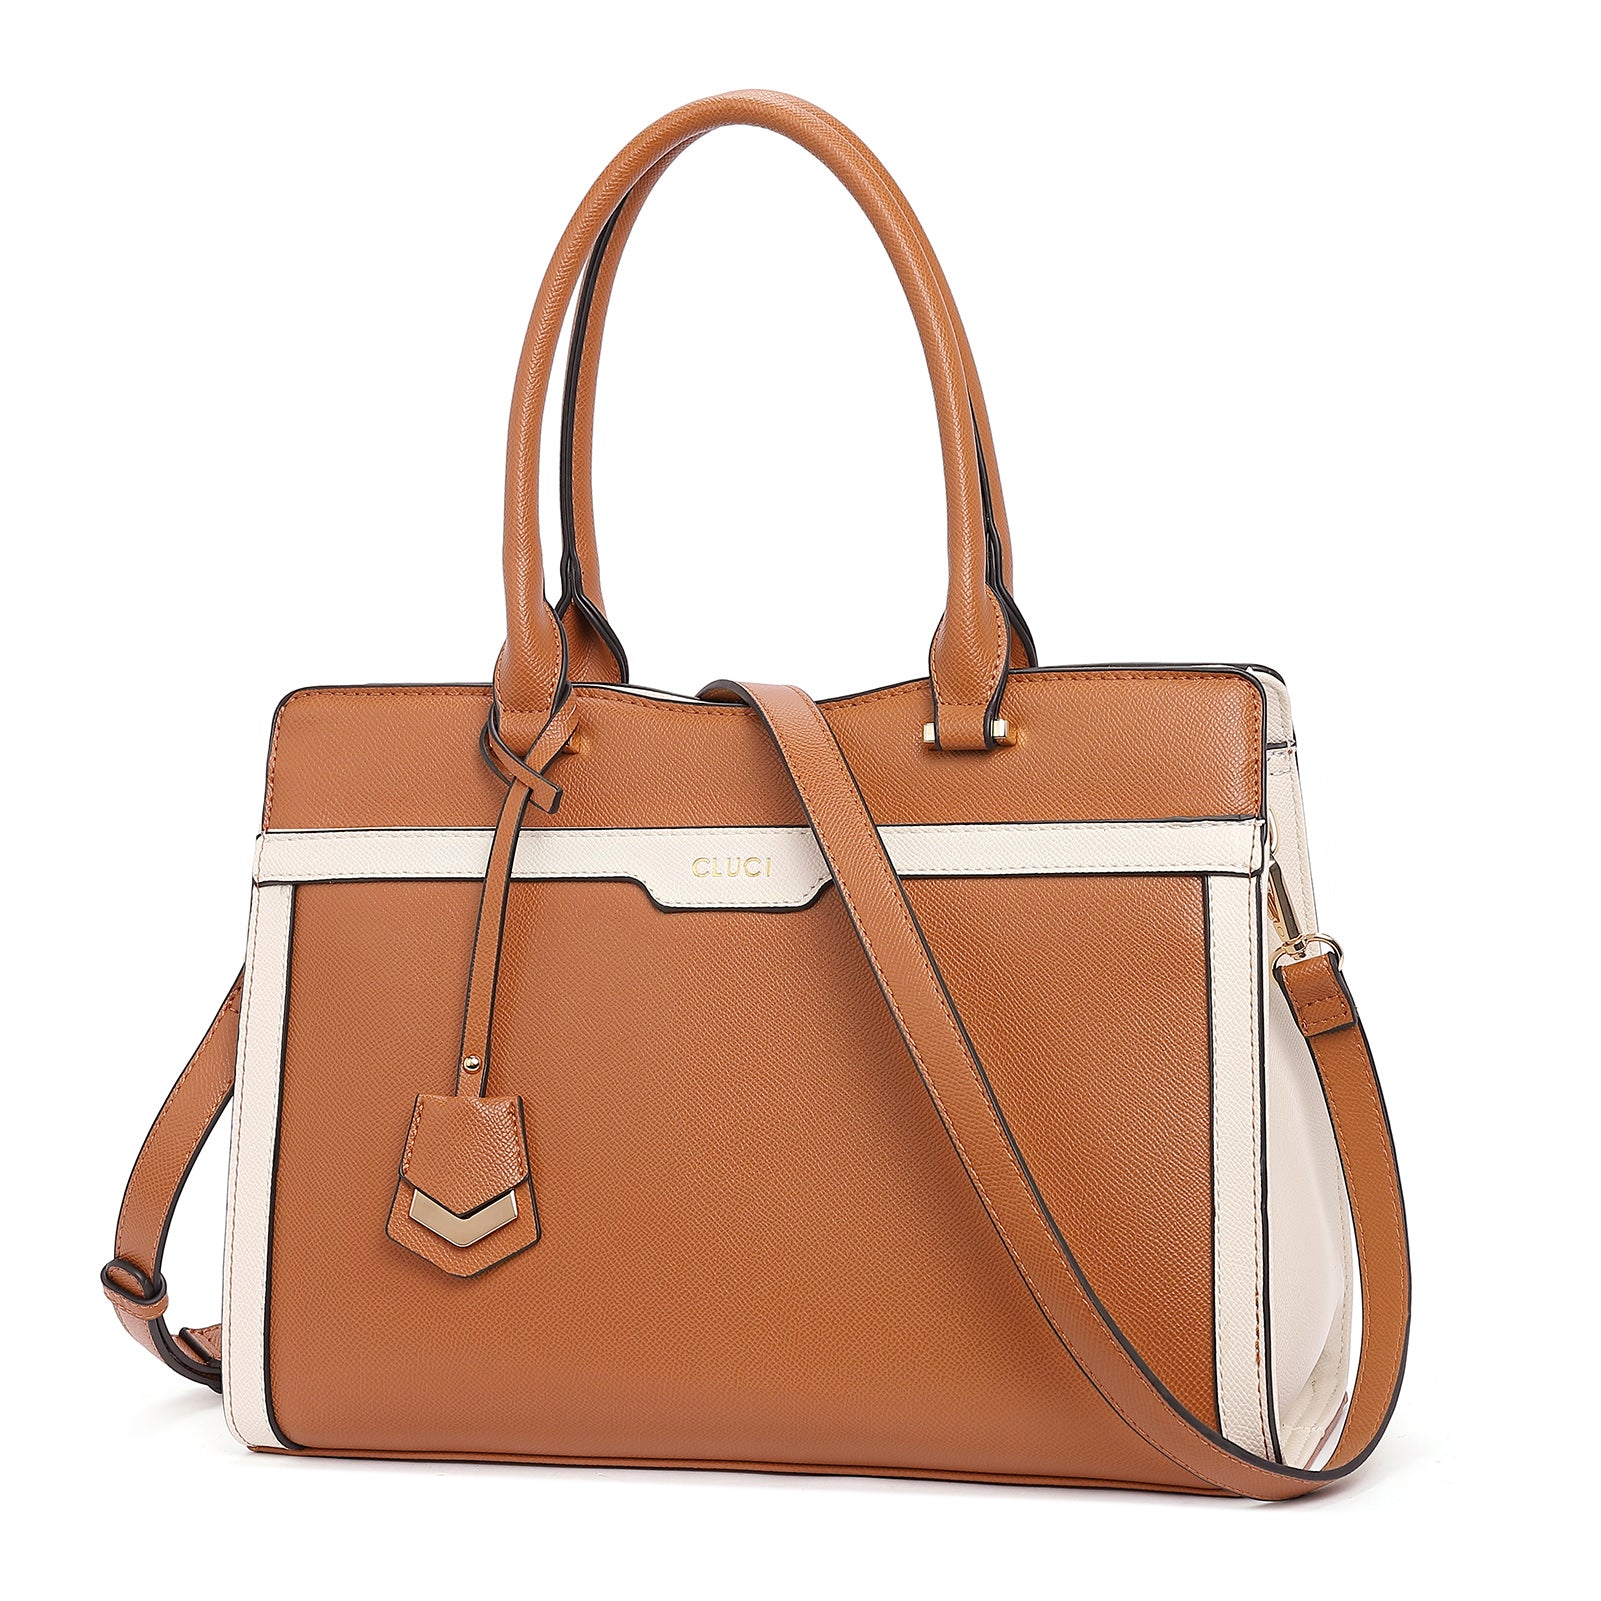 CLUCI Satchel Purses and Handbags for Women Leather Totes Designer Ladies Crossbody Shoulder Bag